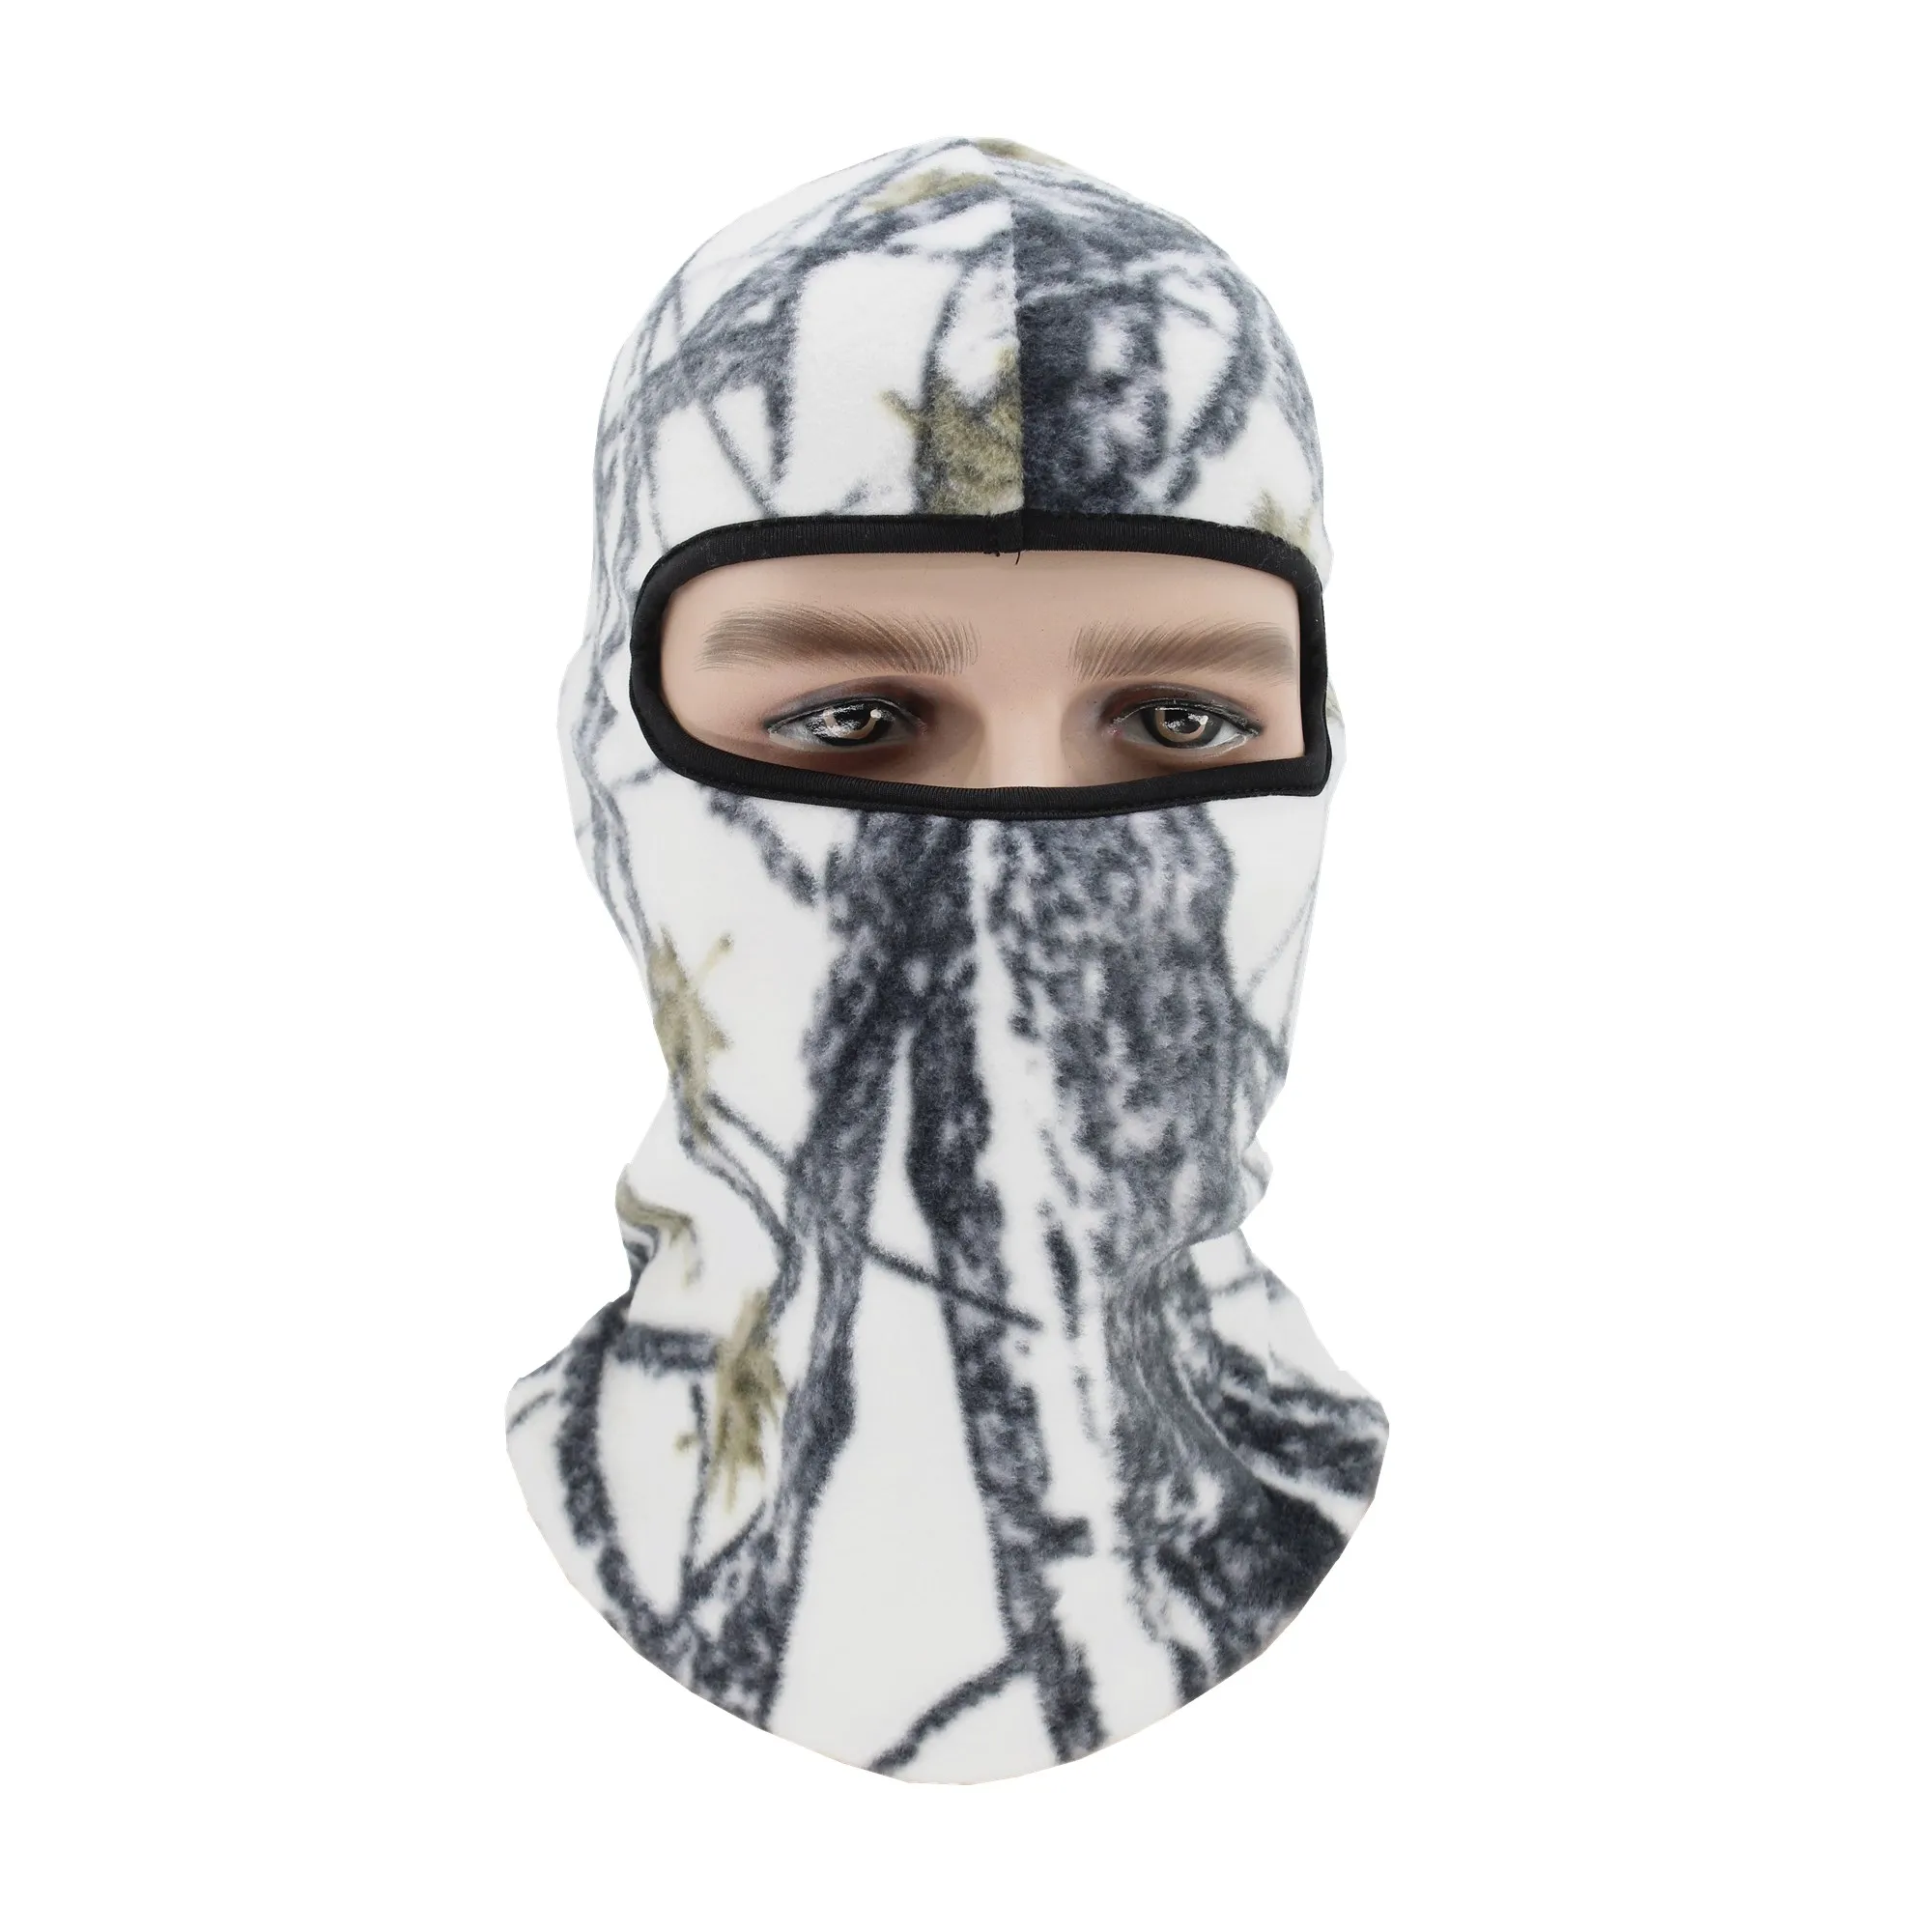 Балаклава, зимняя теплая мотоциклетная маска для лица, защитная крышка для лица, уличная для езды на лыжах, охоты, ветрозащитная мотоциклетная маска для лица, маски